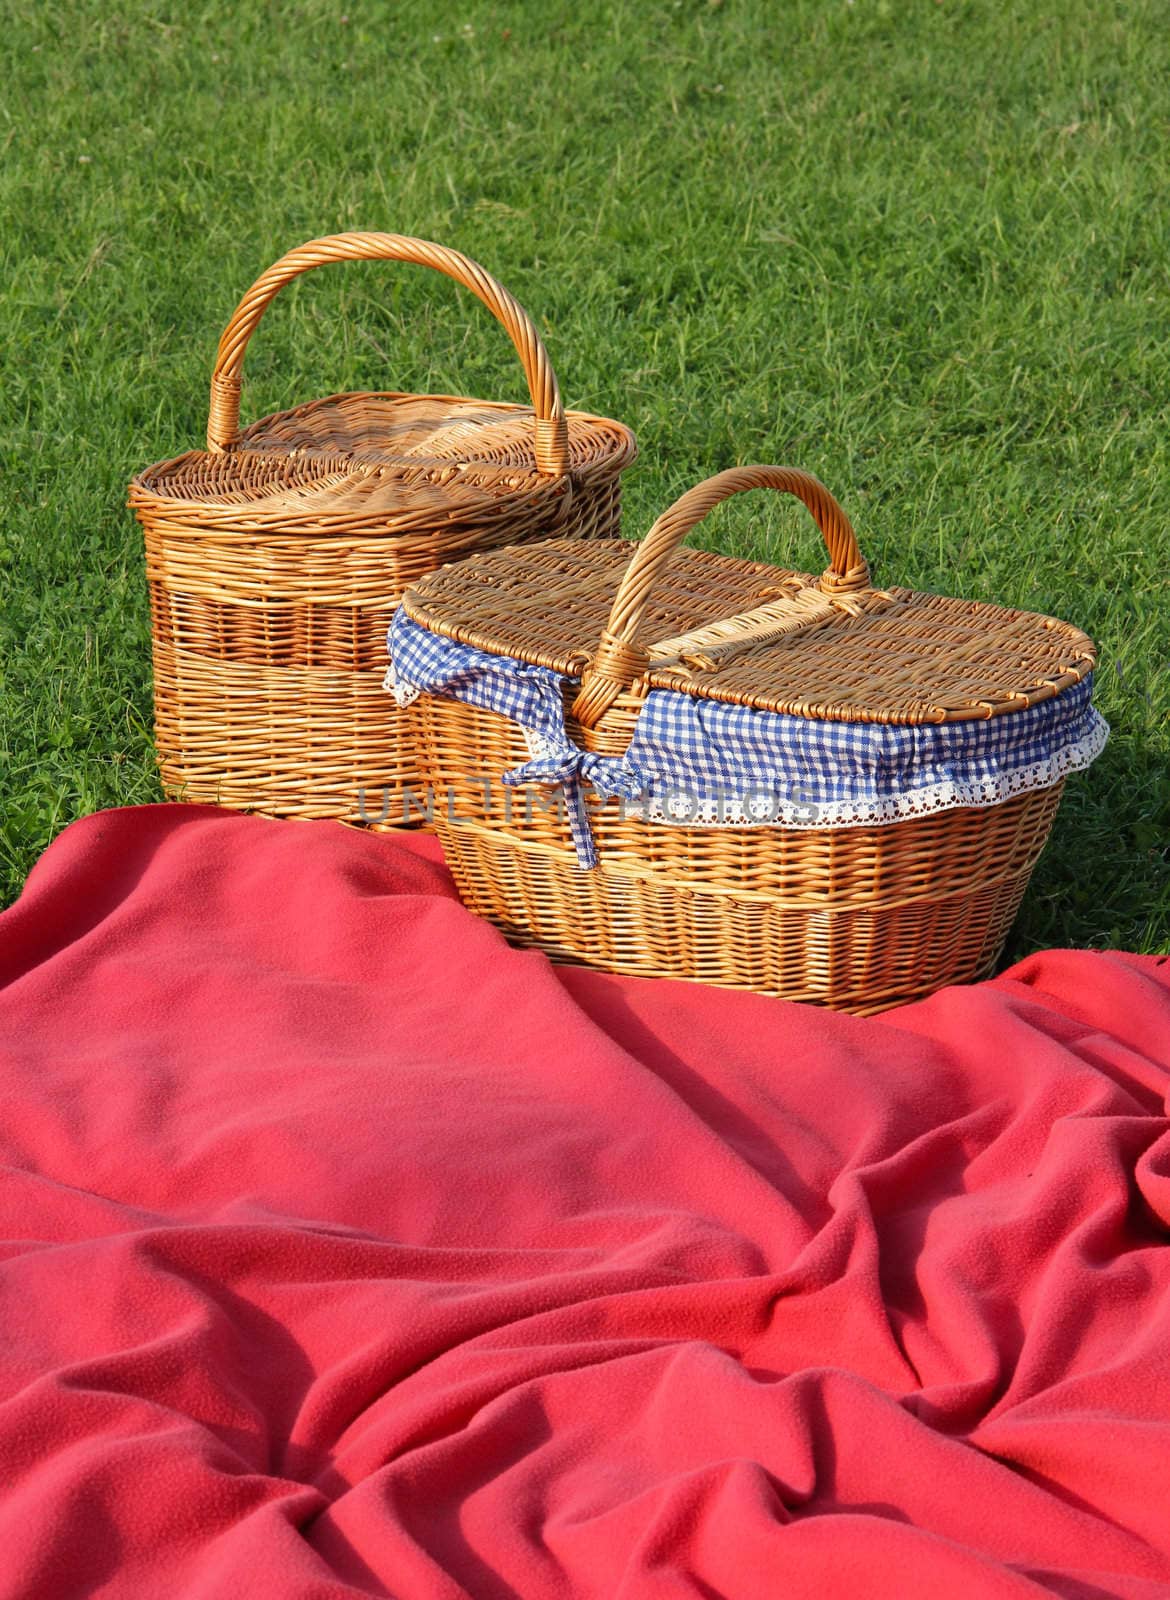 picnic by gallofoto